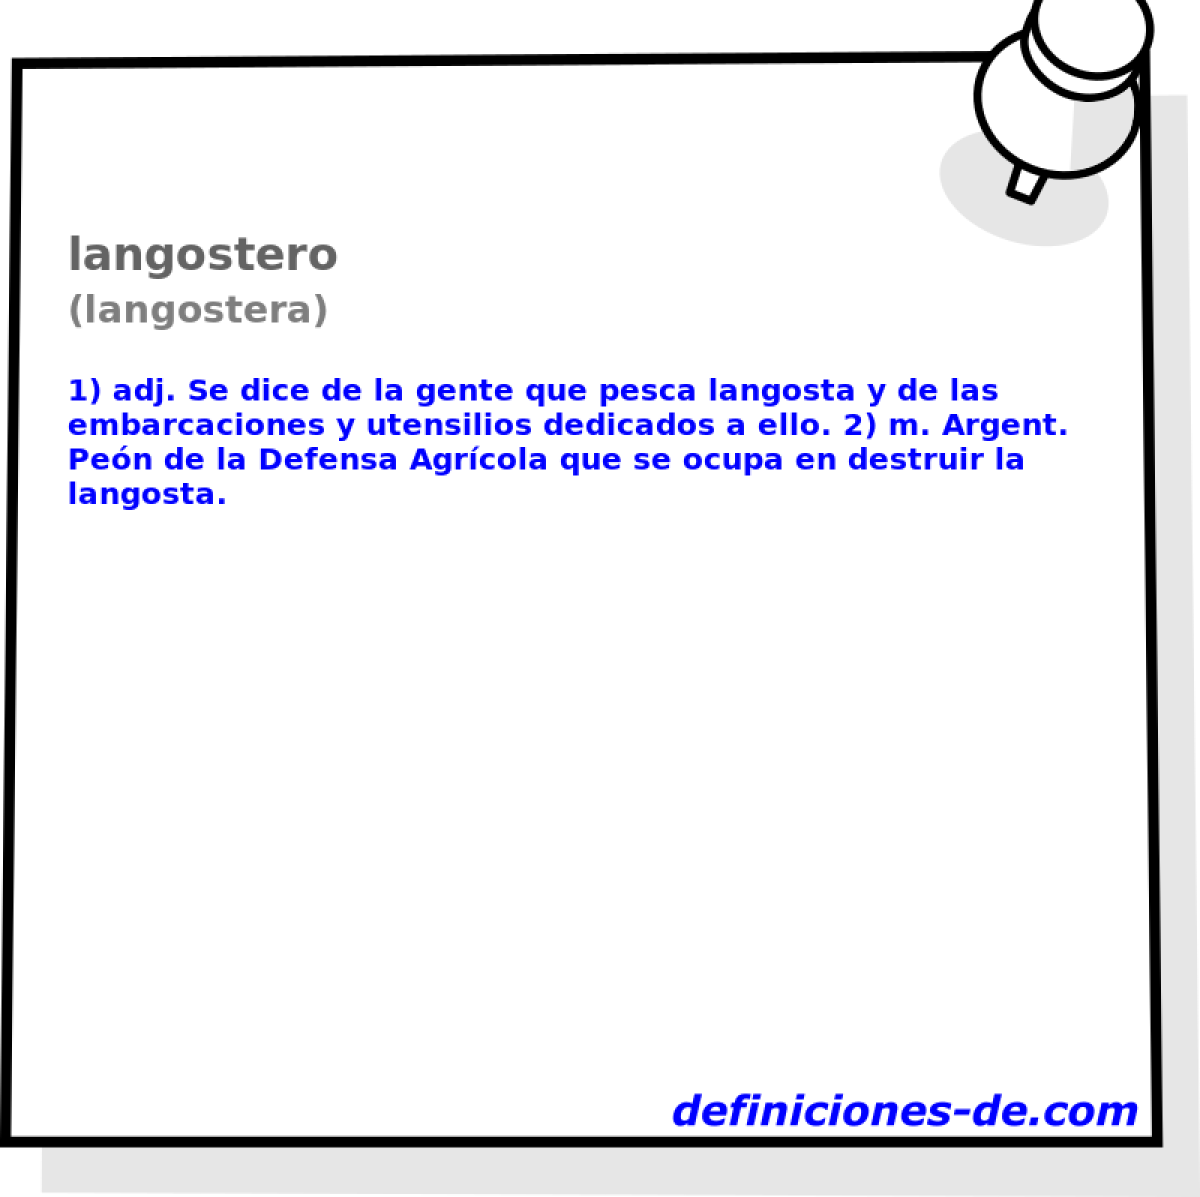 langostero (langostera)